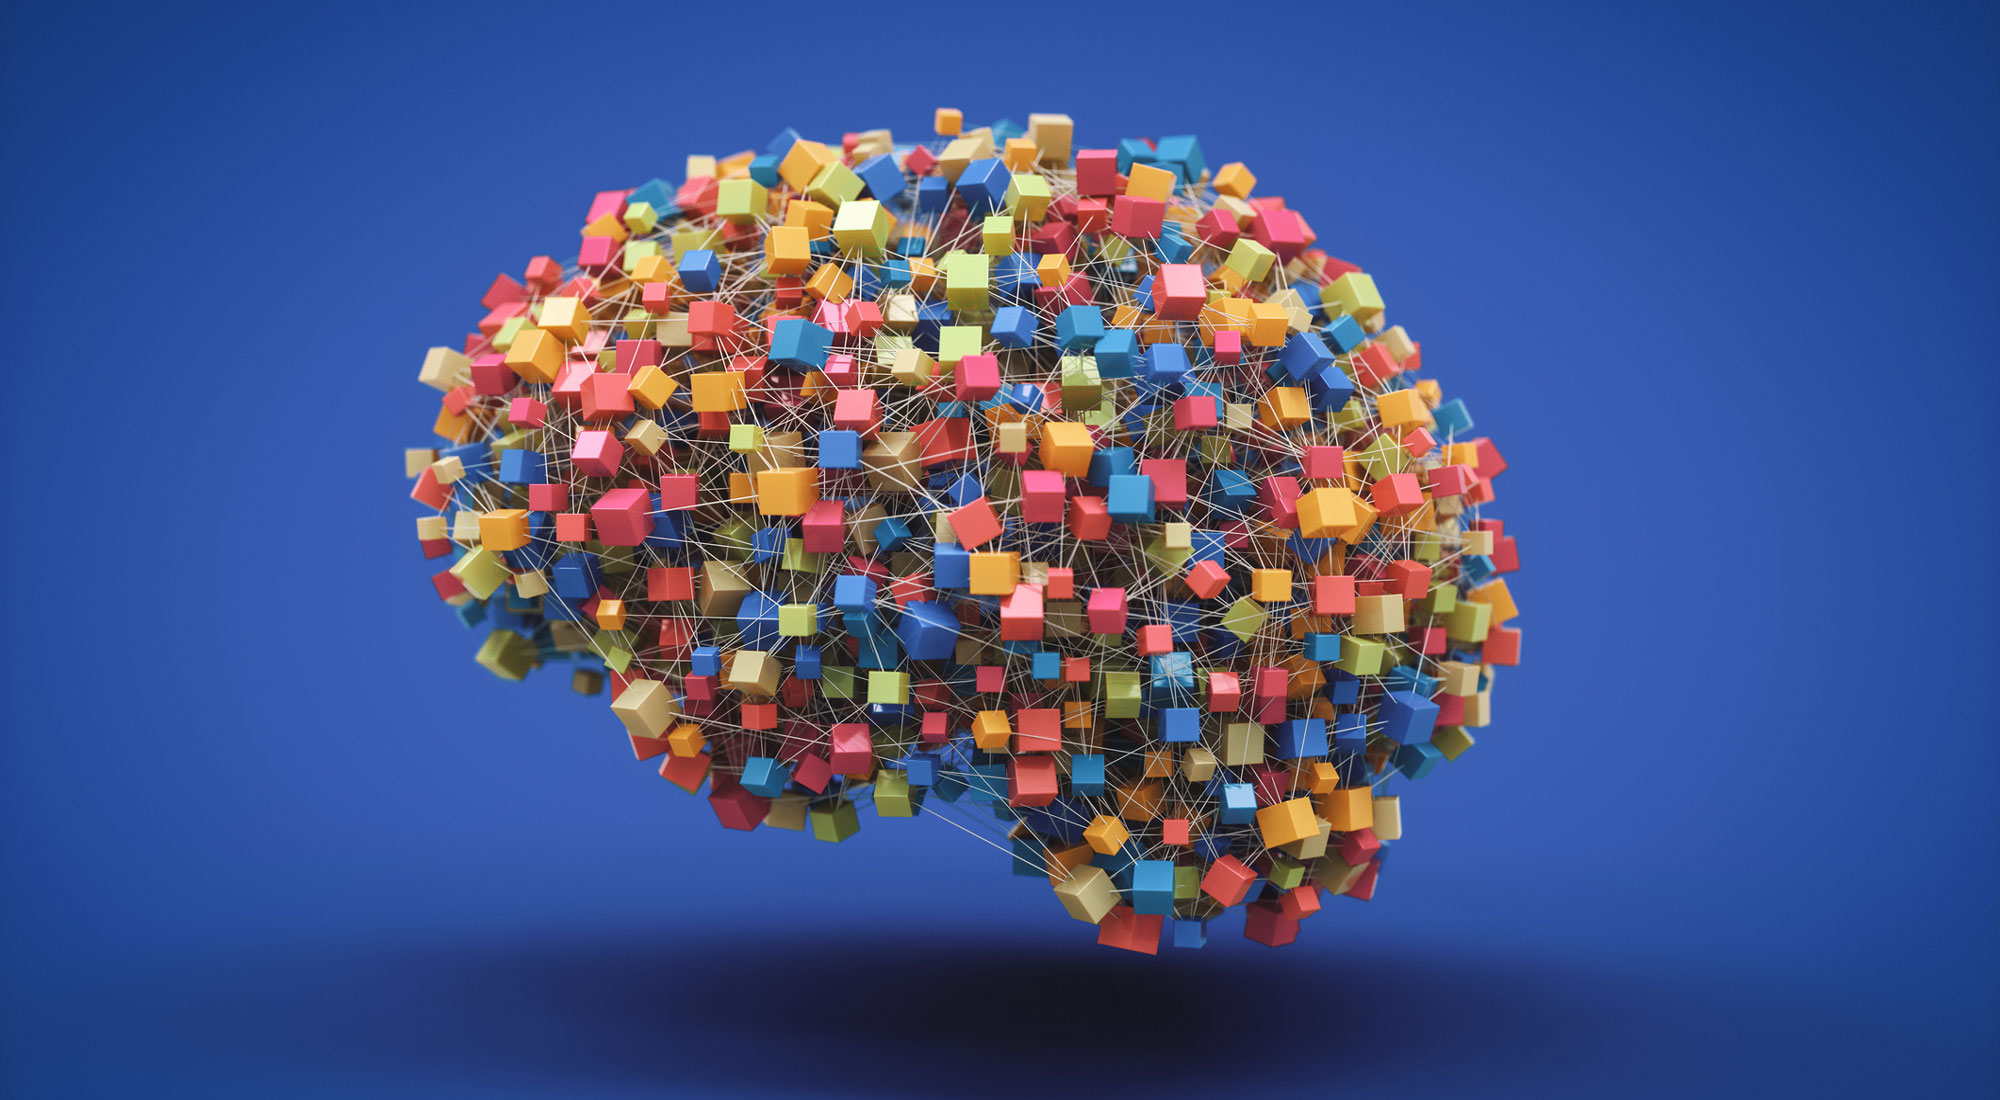 What is Neurodiversity?